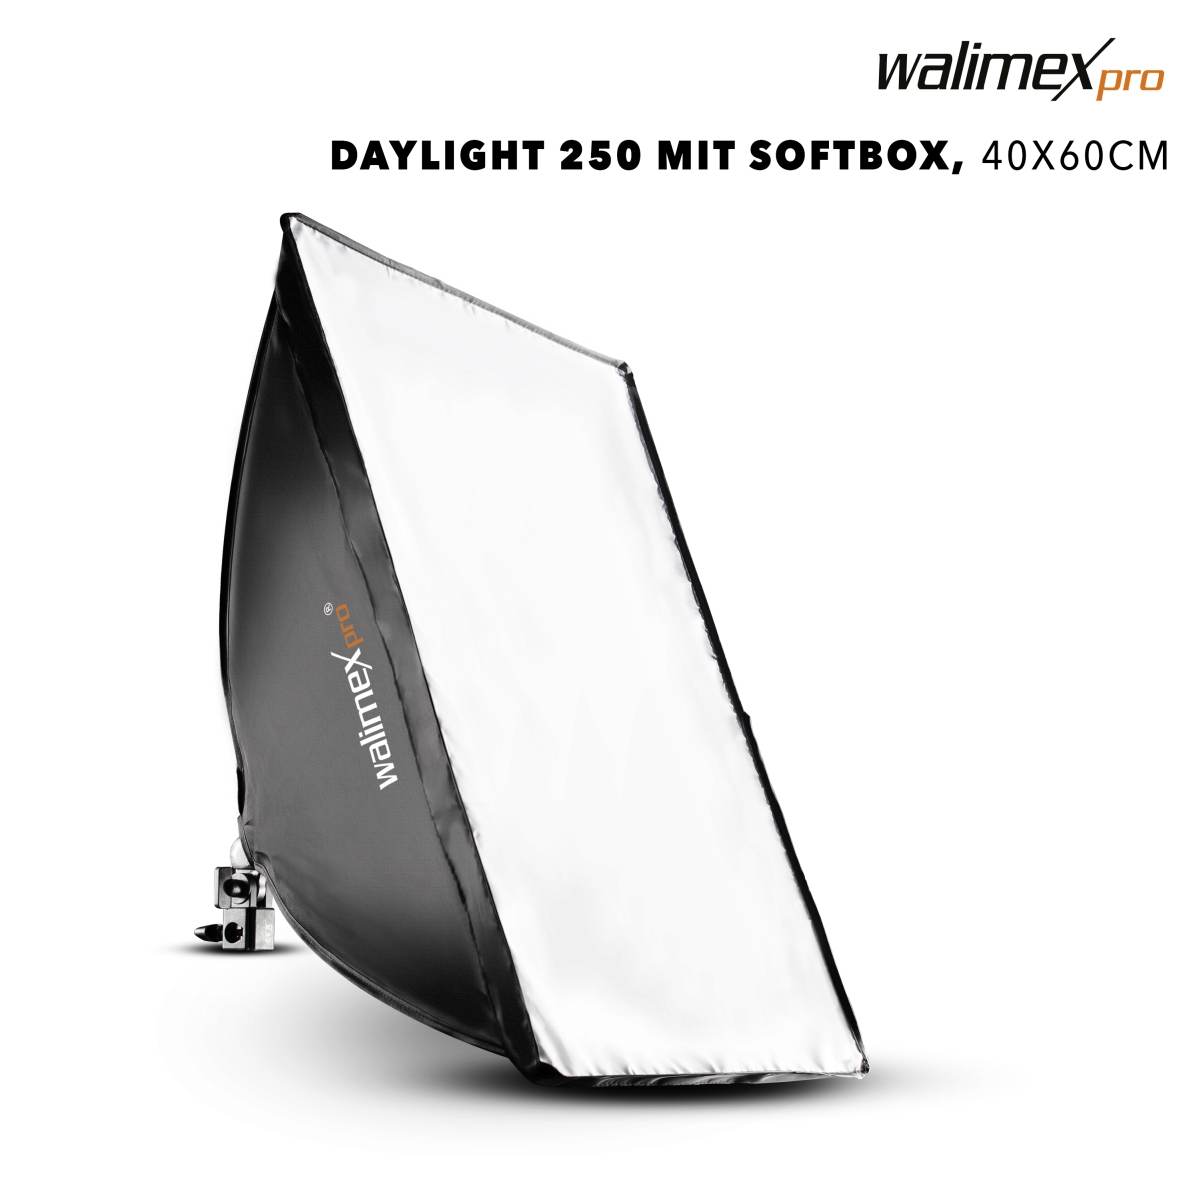 Walimex pro Daylight 250 with Softbox, 40x60cm